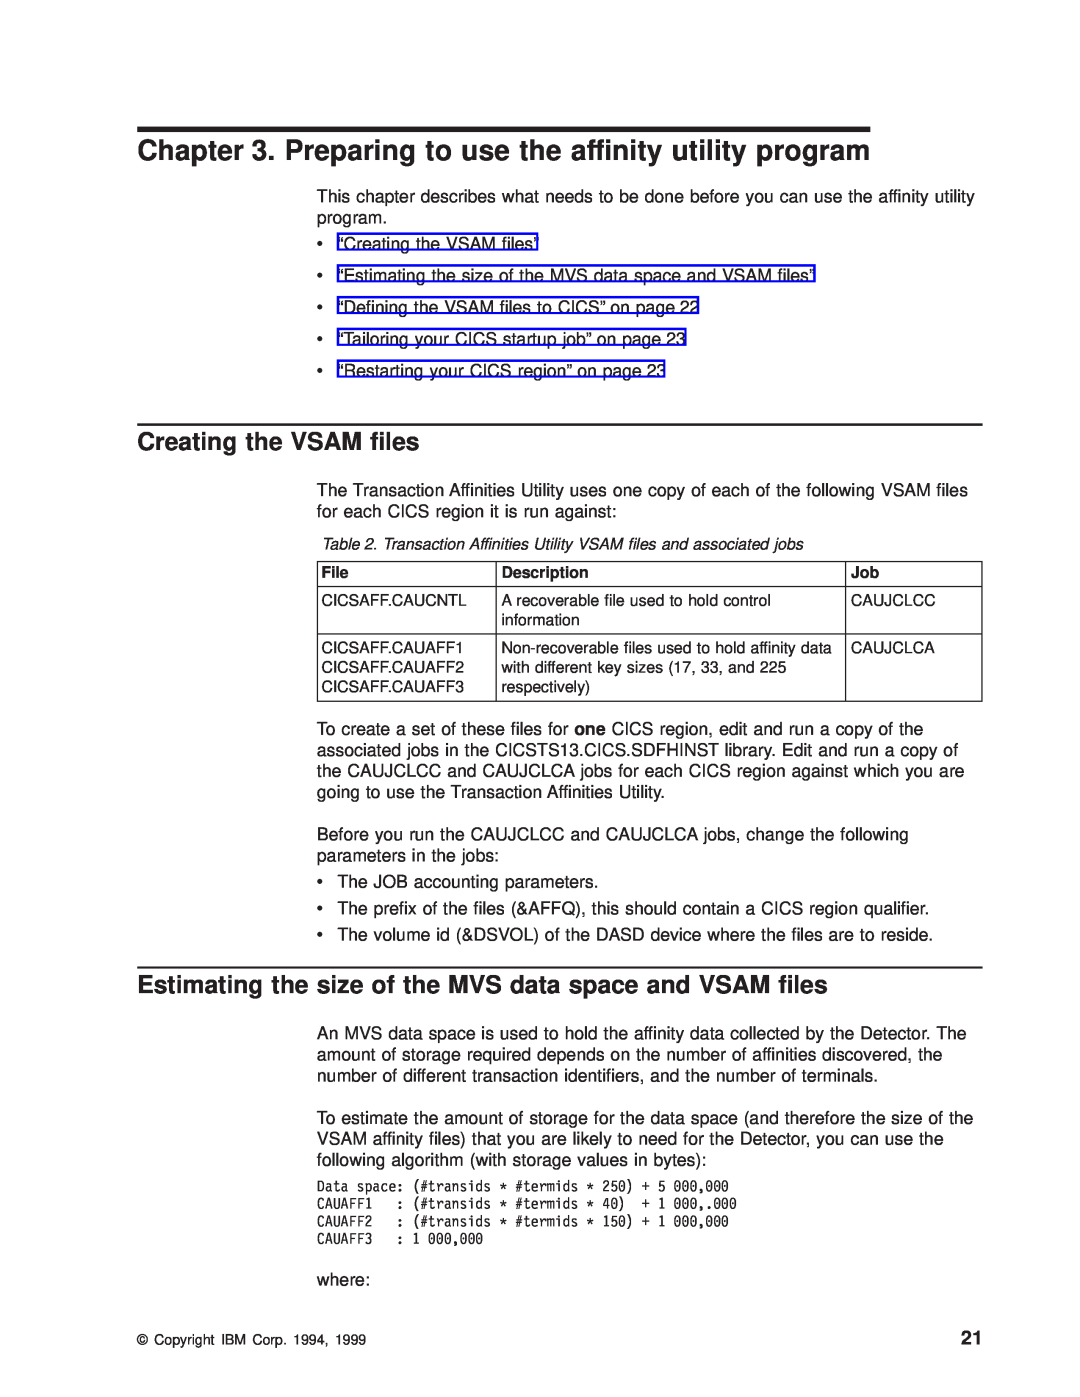 IBM OS manual Preparing to use the affinity utility program, Creating the VSAM les 